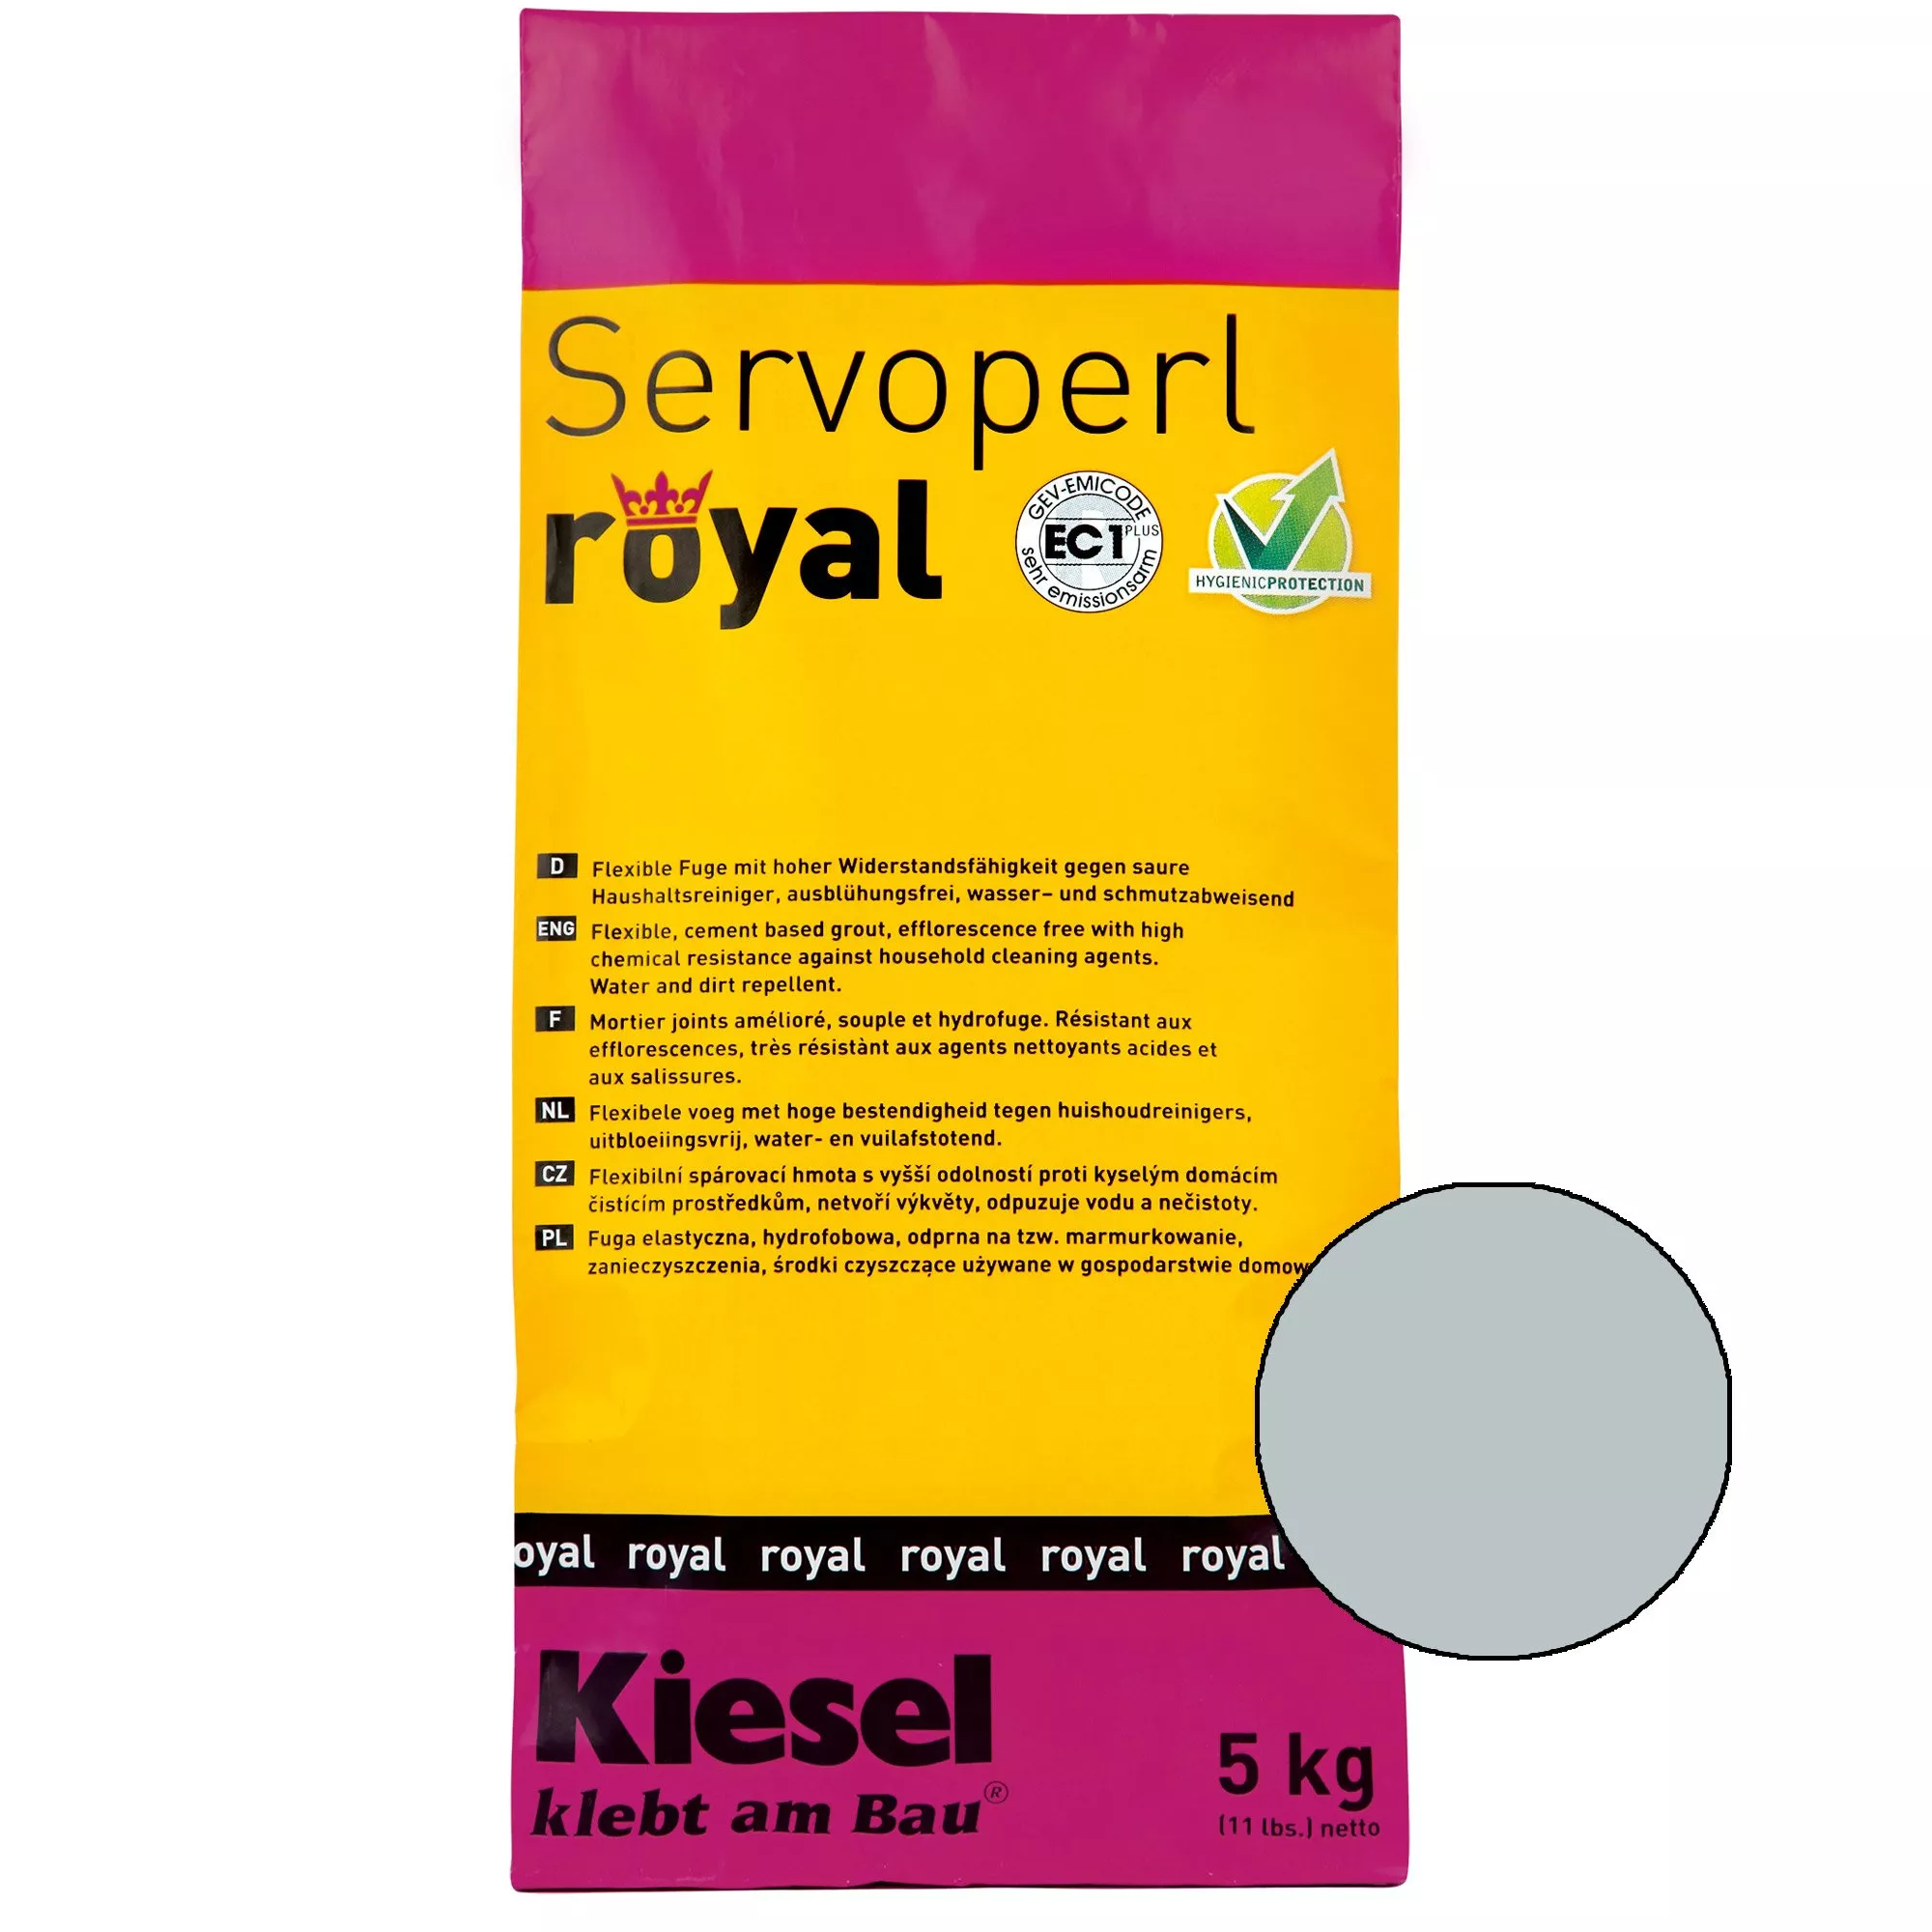 Kiesel Servoperl royal - composto comum - 5 kg Manhattan